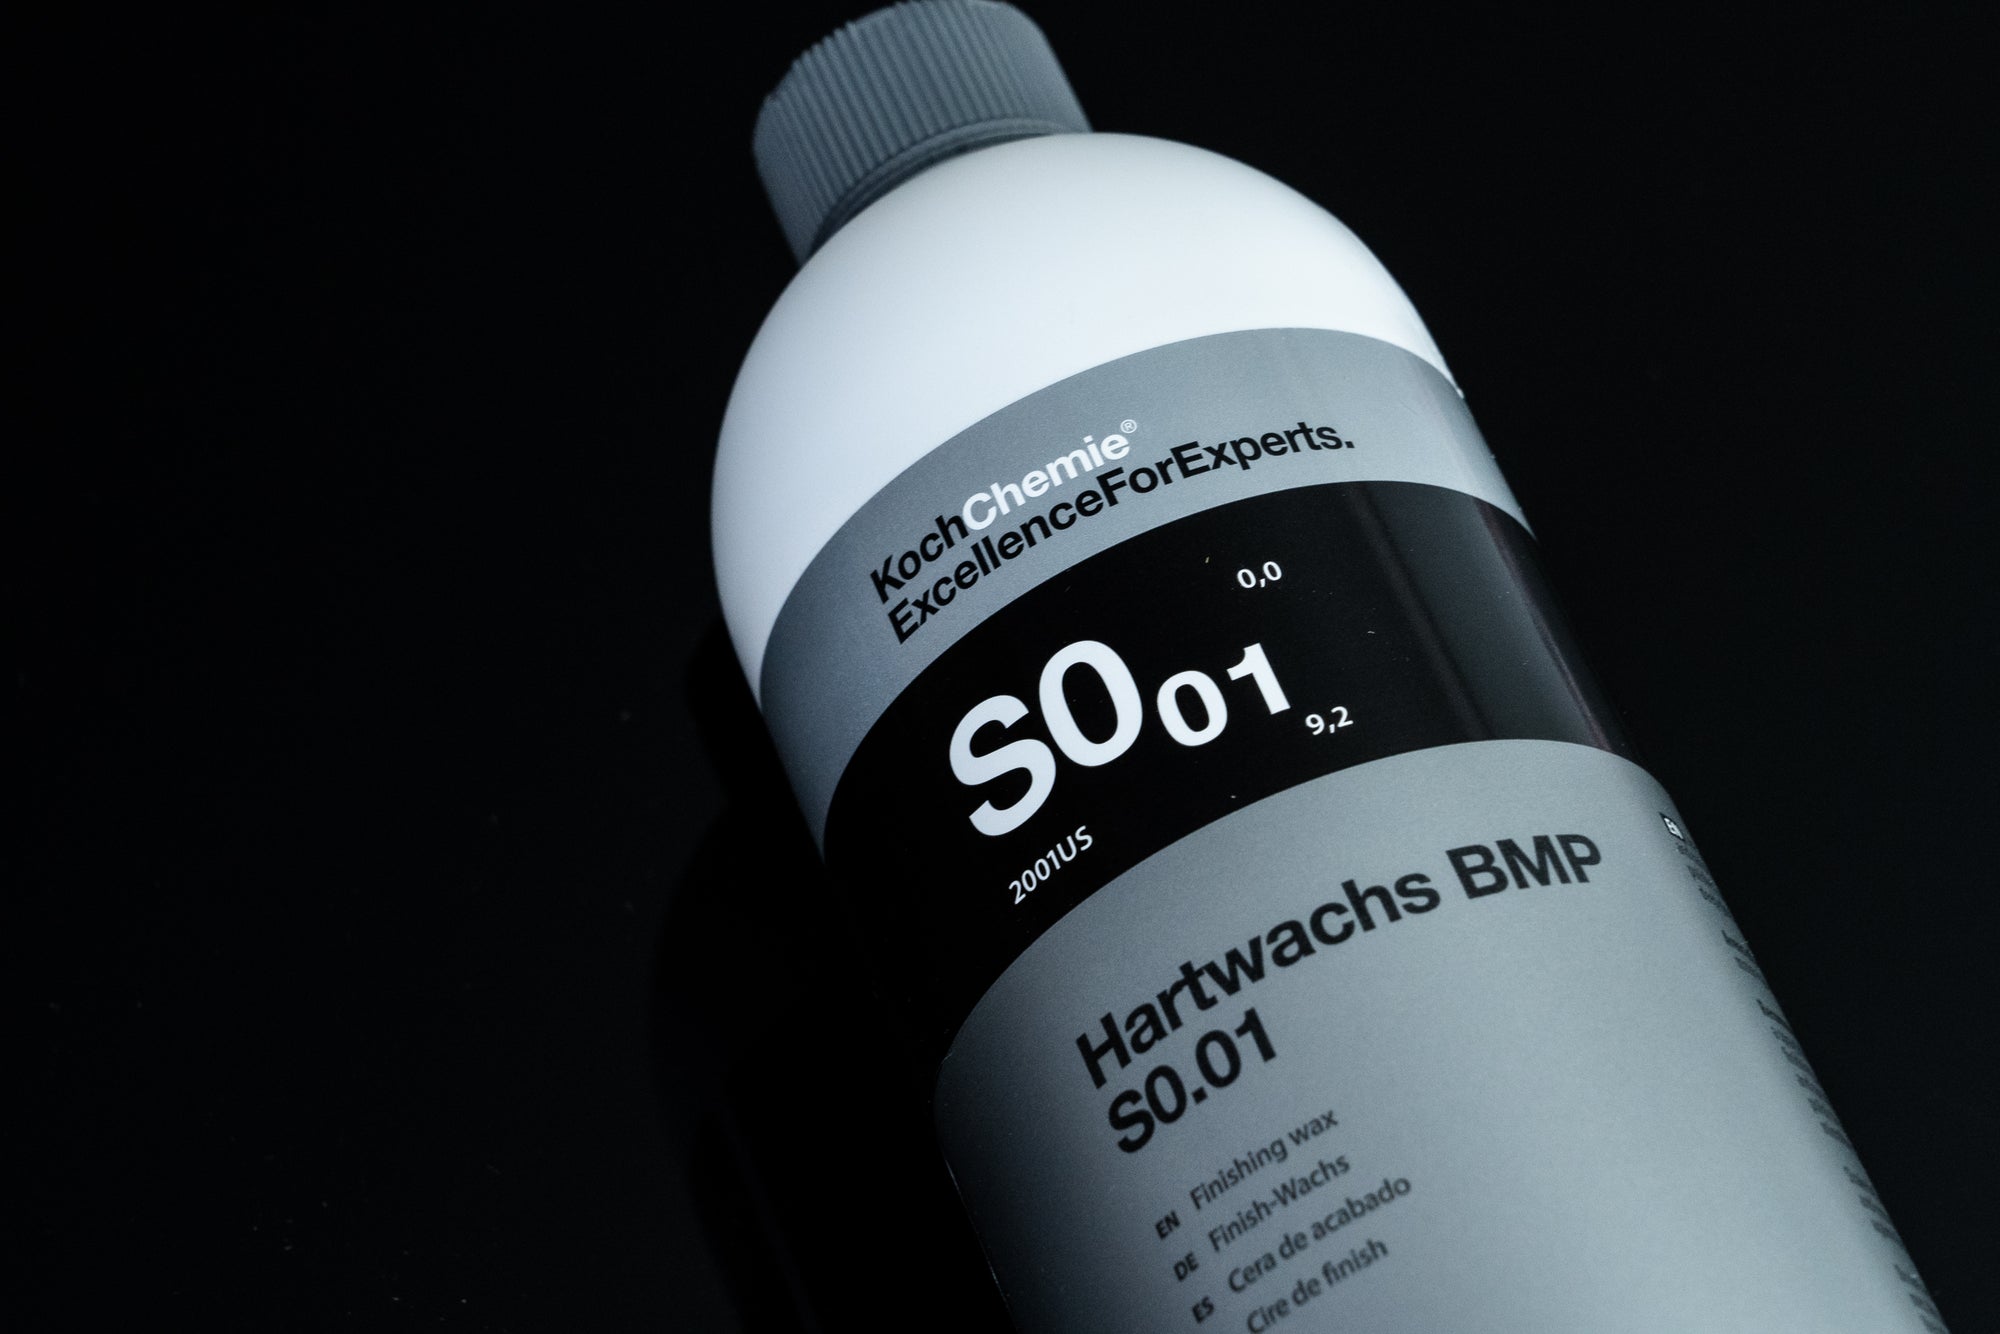 Koch Chemie S0 01 (Hartwachs BMP Finishing Spray Wax)